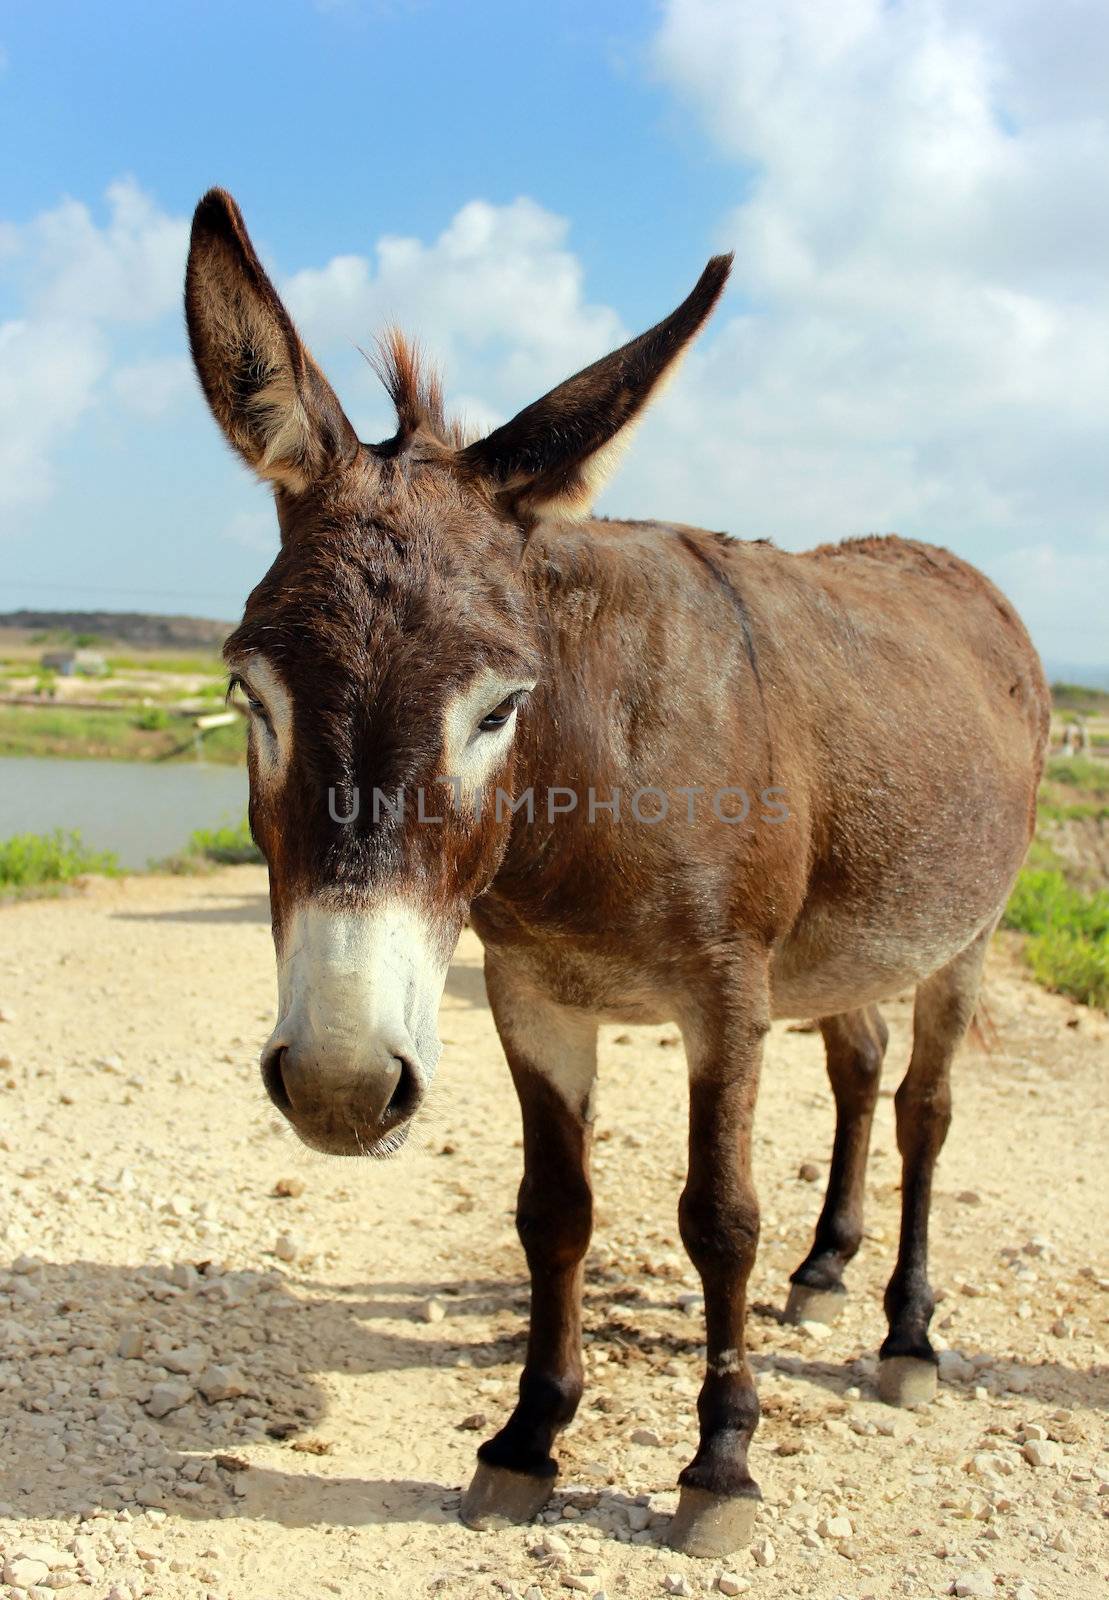 curious donkey by irisphoto4